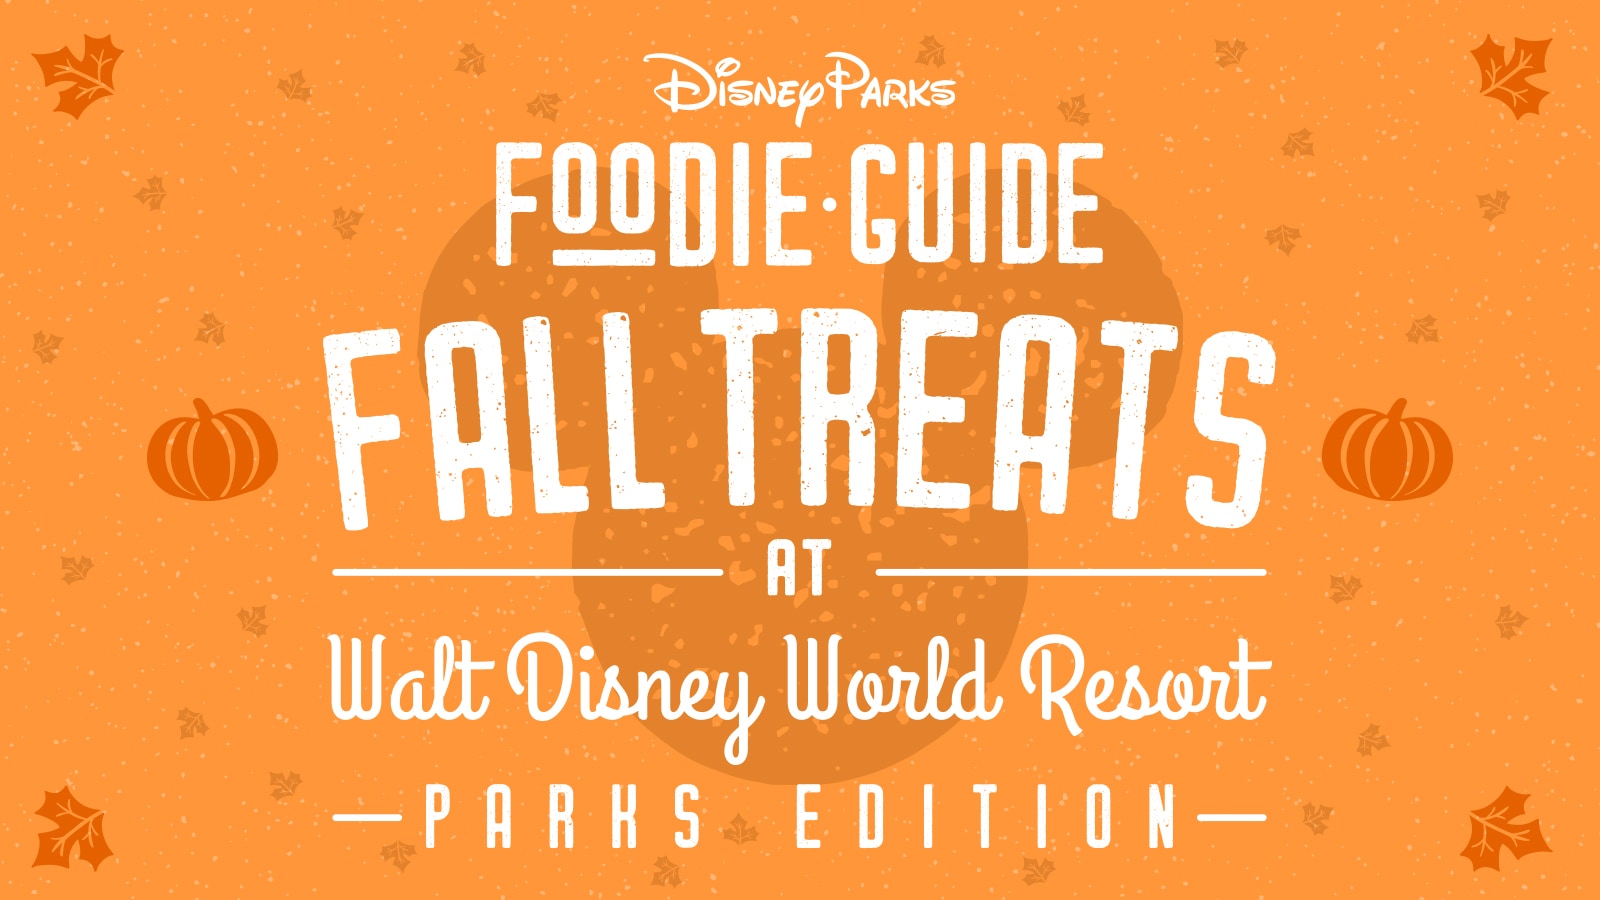 disney halloween food guide 2020 Foodie Guide To 2020 Fall Treats At Walt Disney World Resort Parks Edition Disney Parks Blog disney halloween food guide 2020